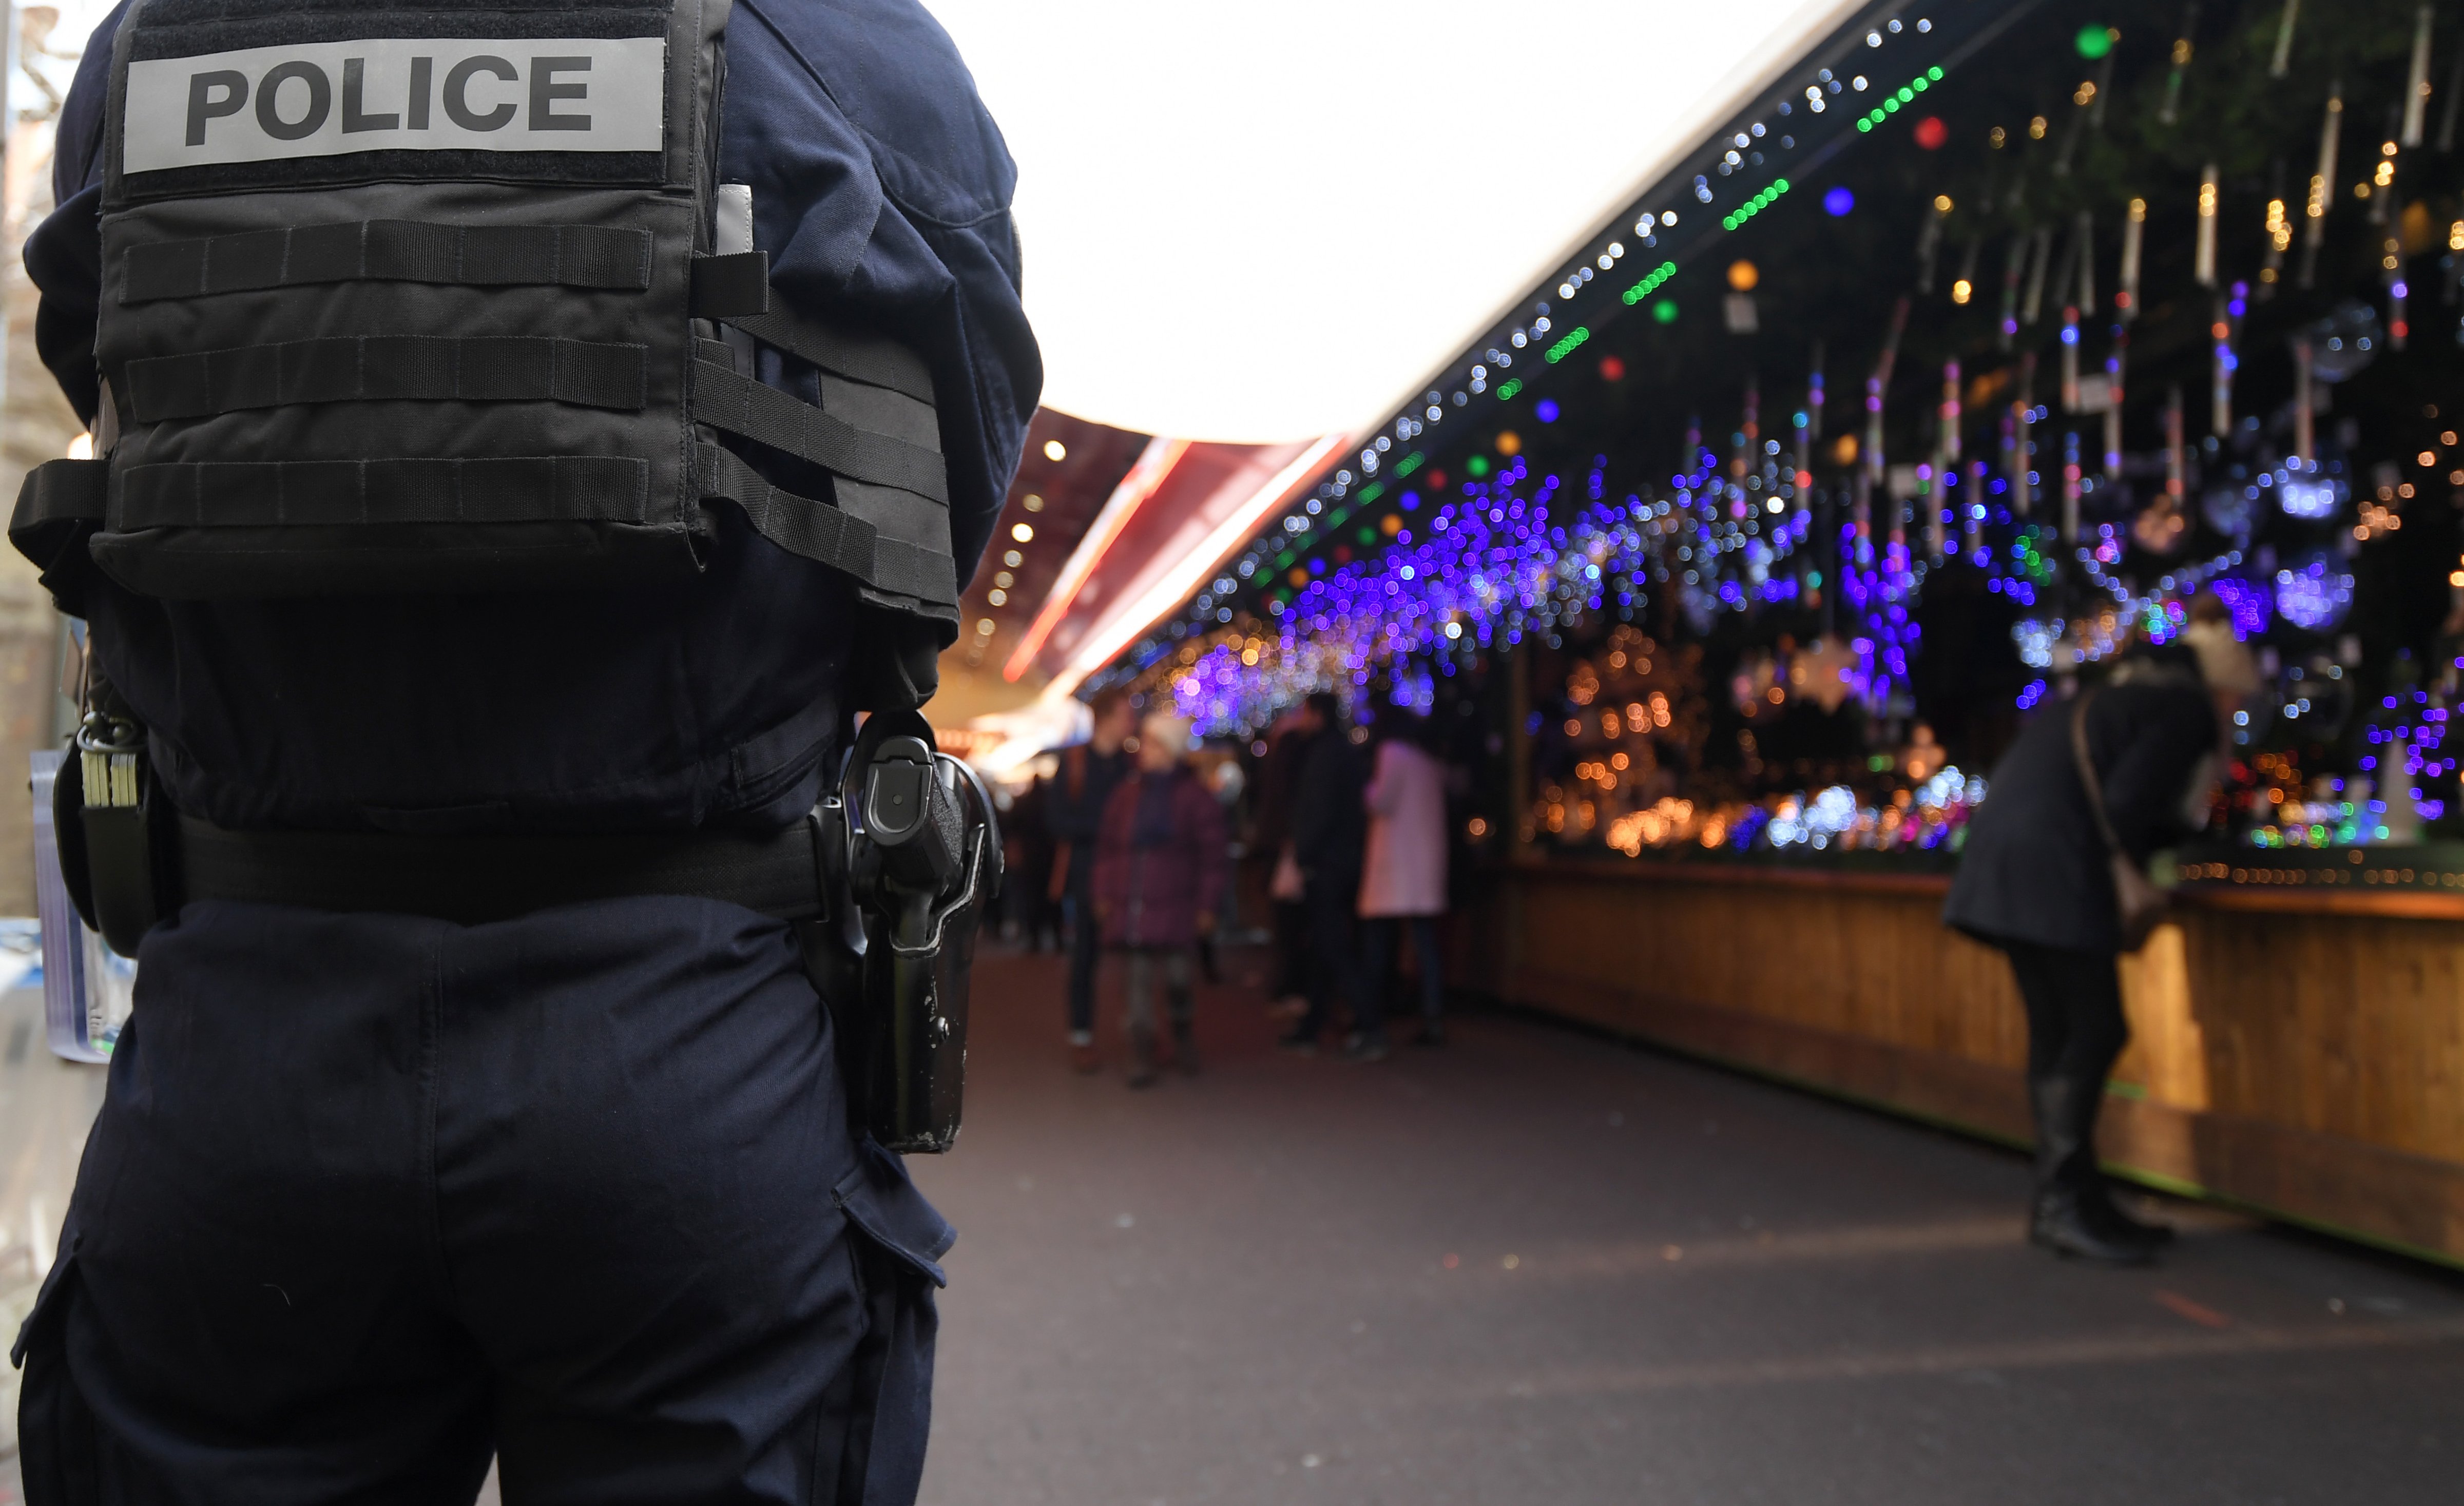 A police officer patrols on the Christmas market in Strasbourg, France, on Dec. 20, 2016. (Patrick Hertzog—AFP/Getty Images)